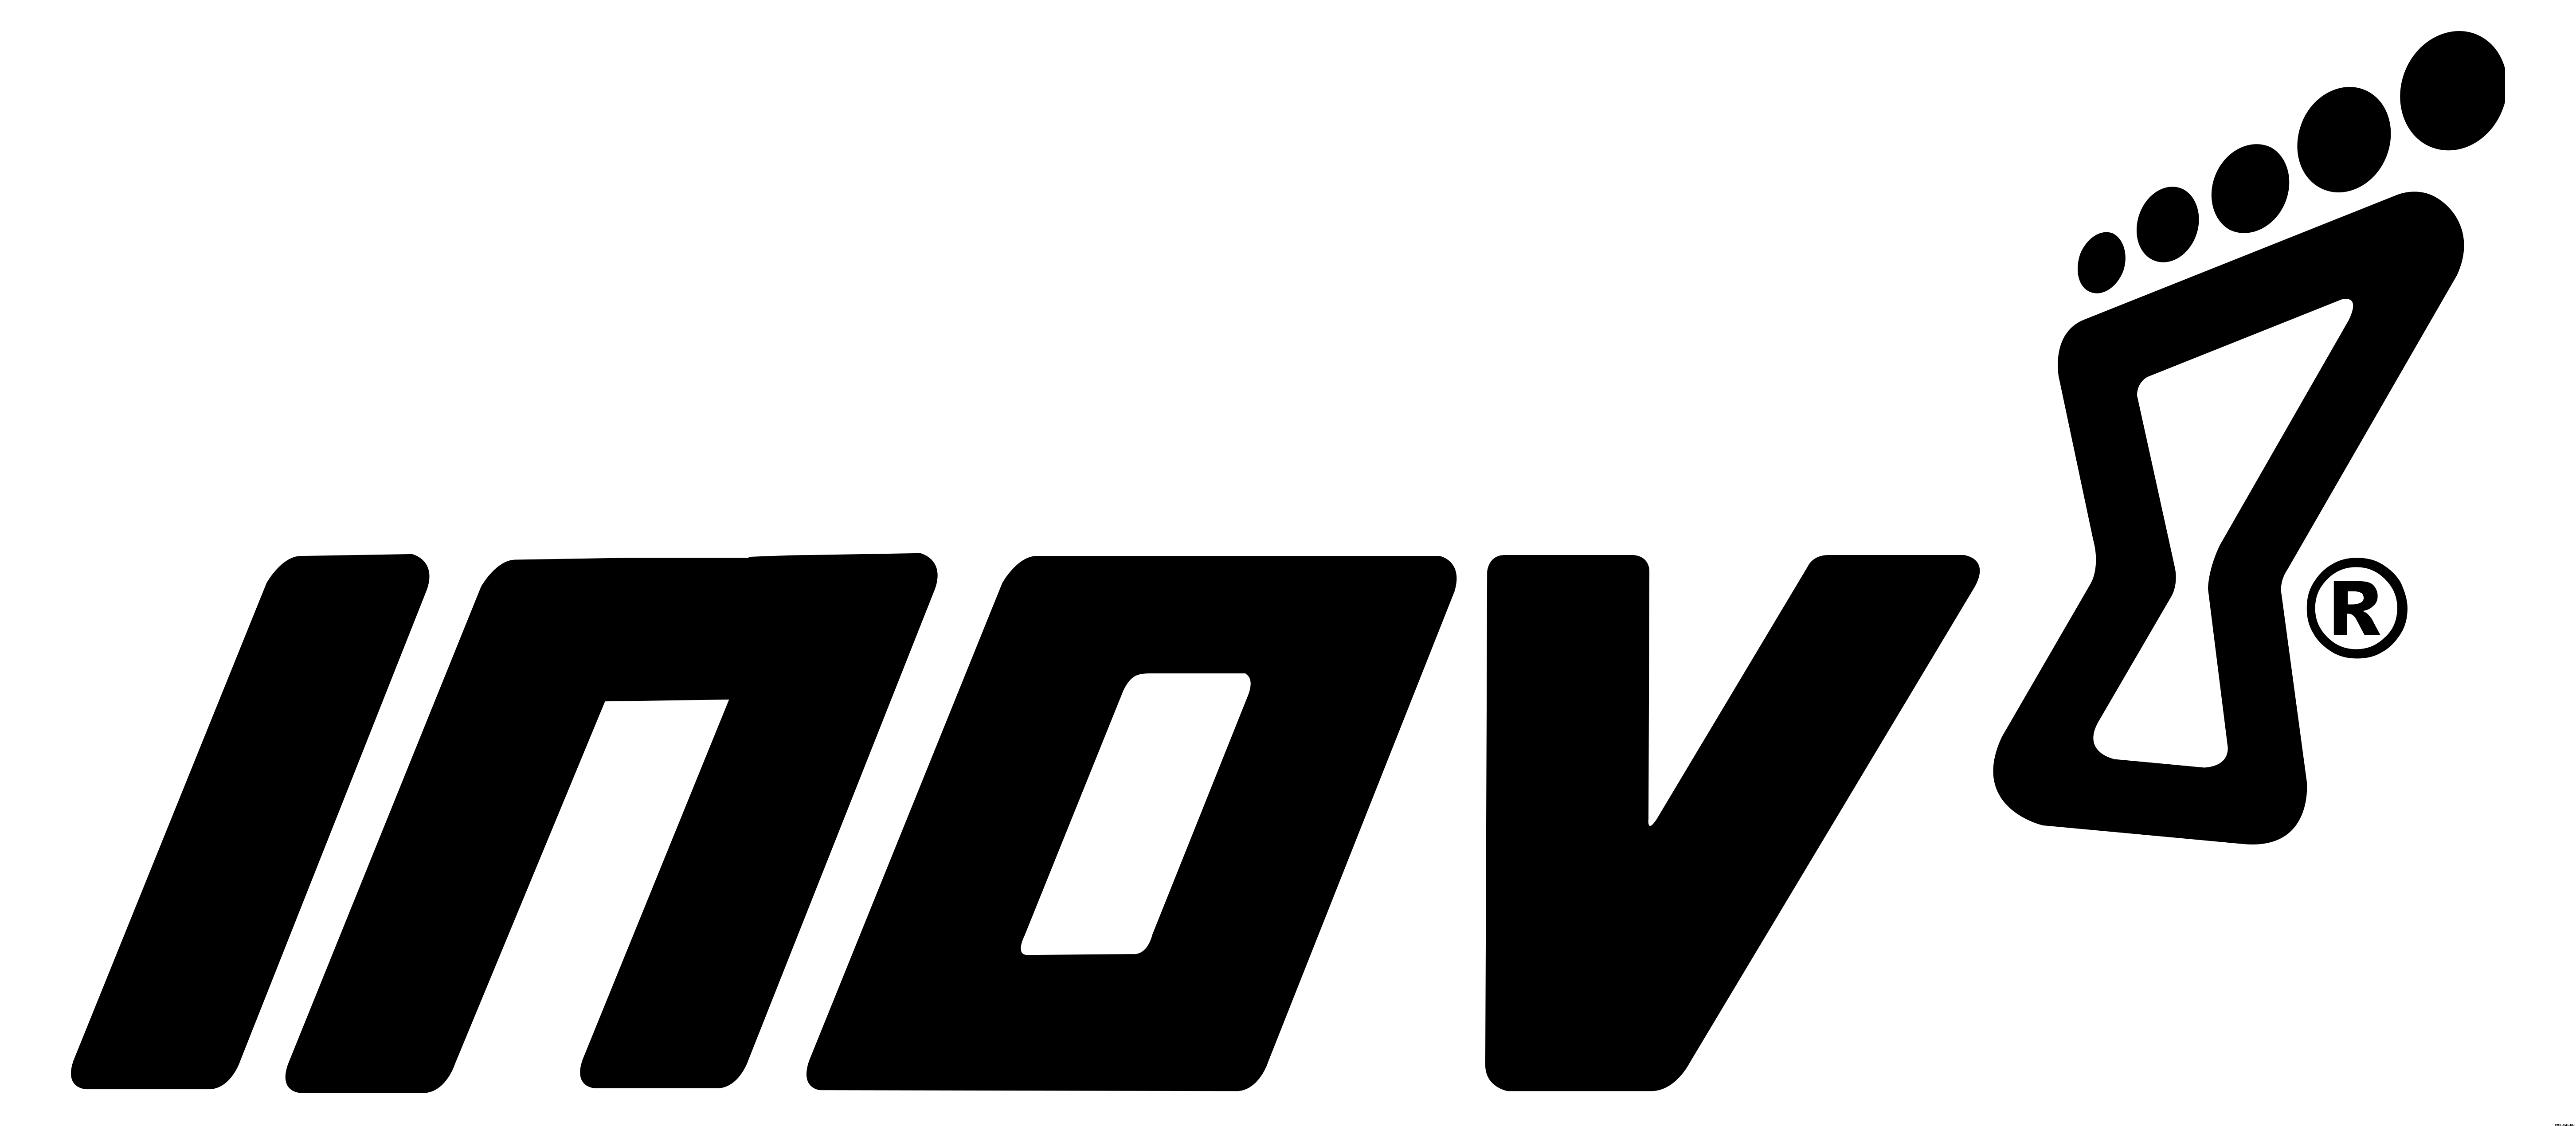 Inov-8 Logo - Inov 8. Varuste.net English